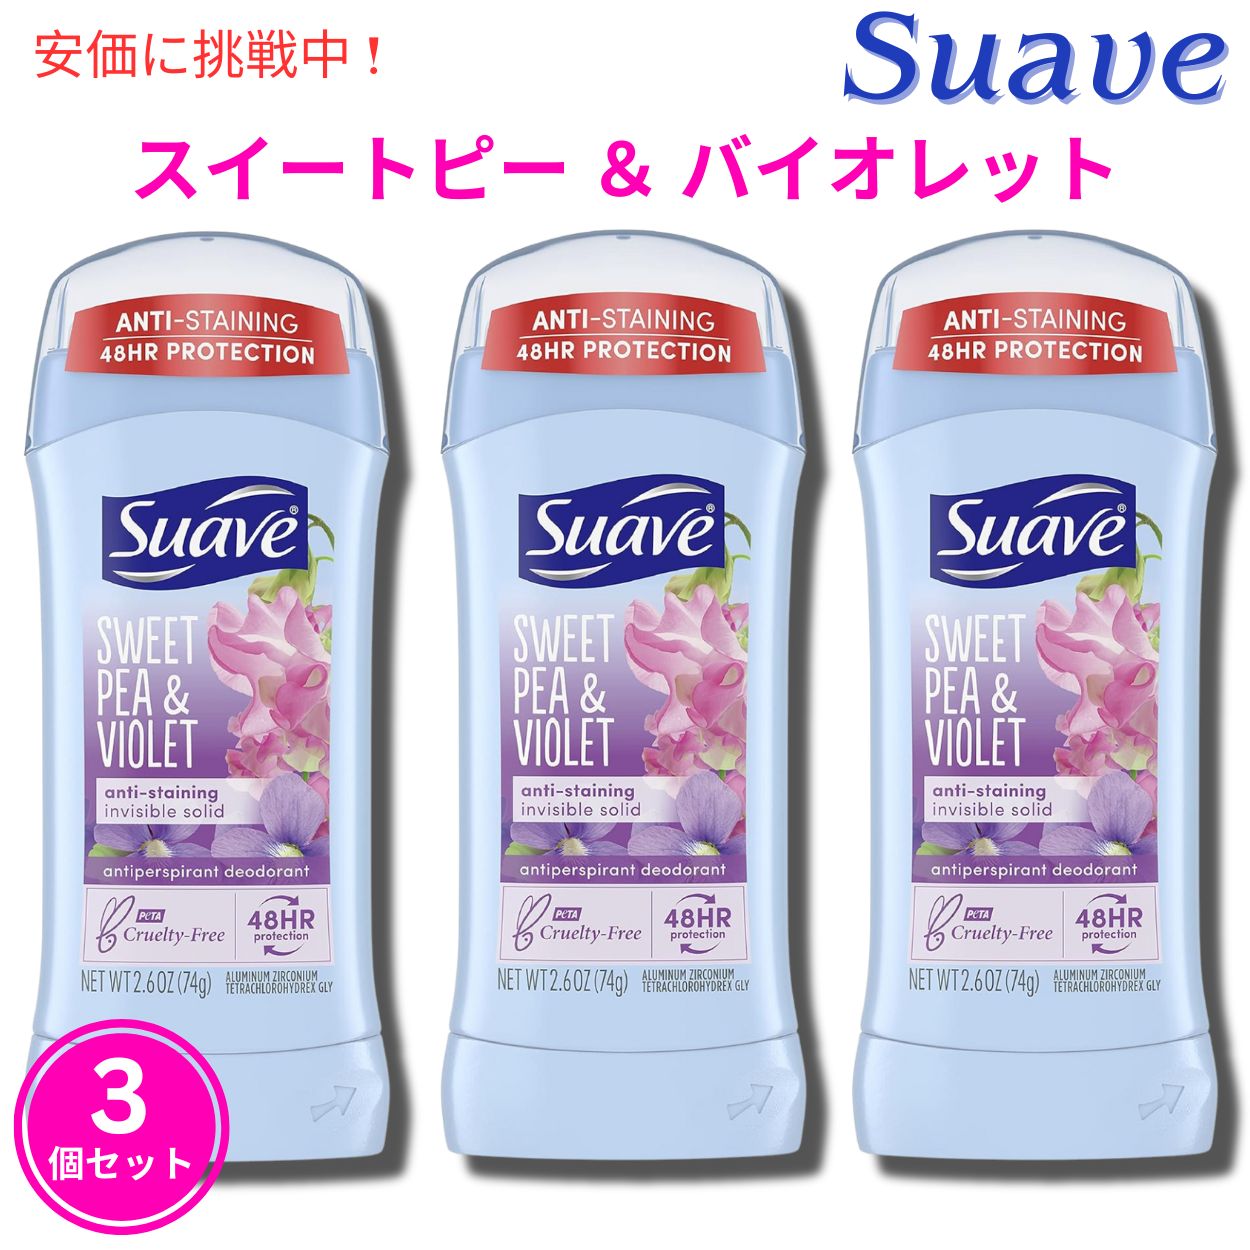 Sweetpea Violet Suave スアーブ デオドラント スイートピー バイオレット 74g スティック状 3個セット Deodorant Stick Set of 3